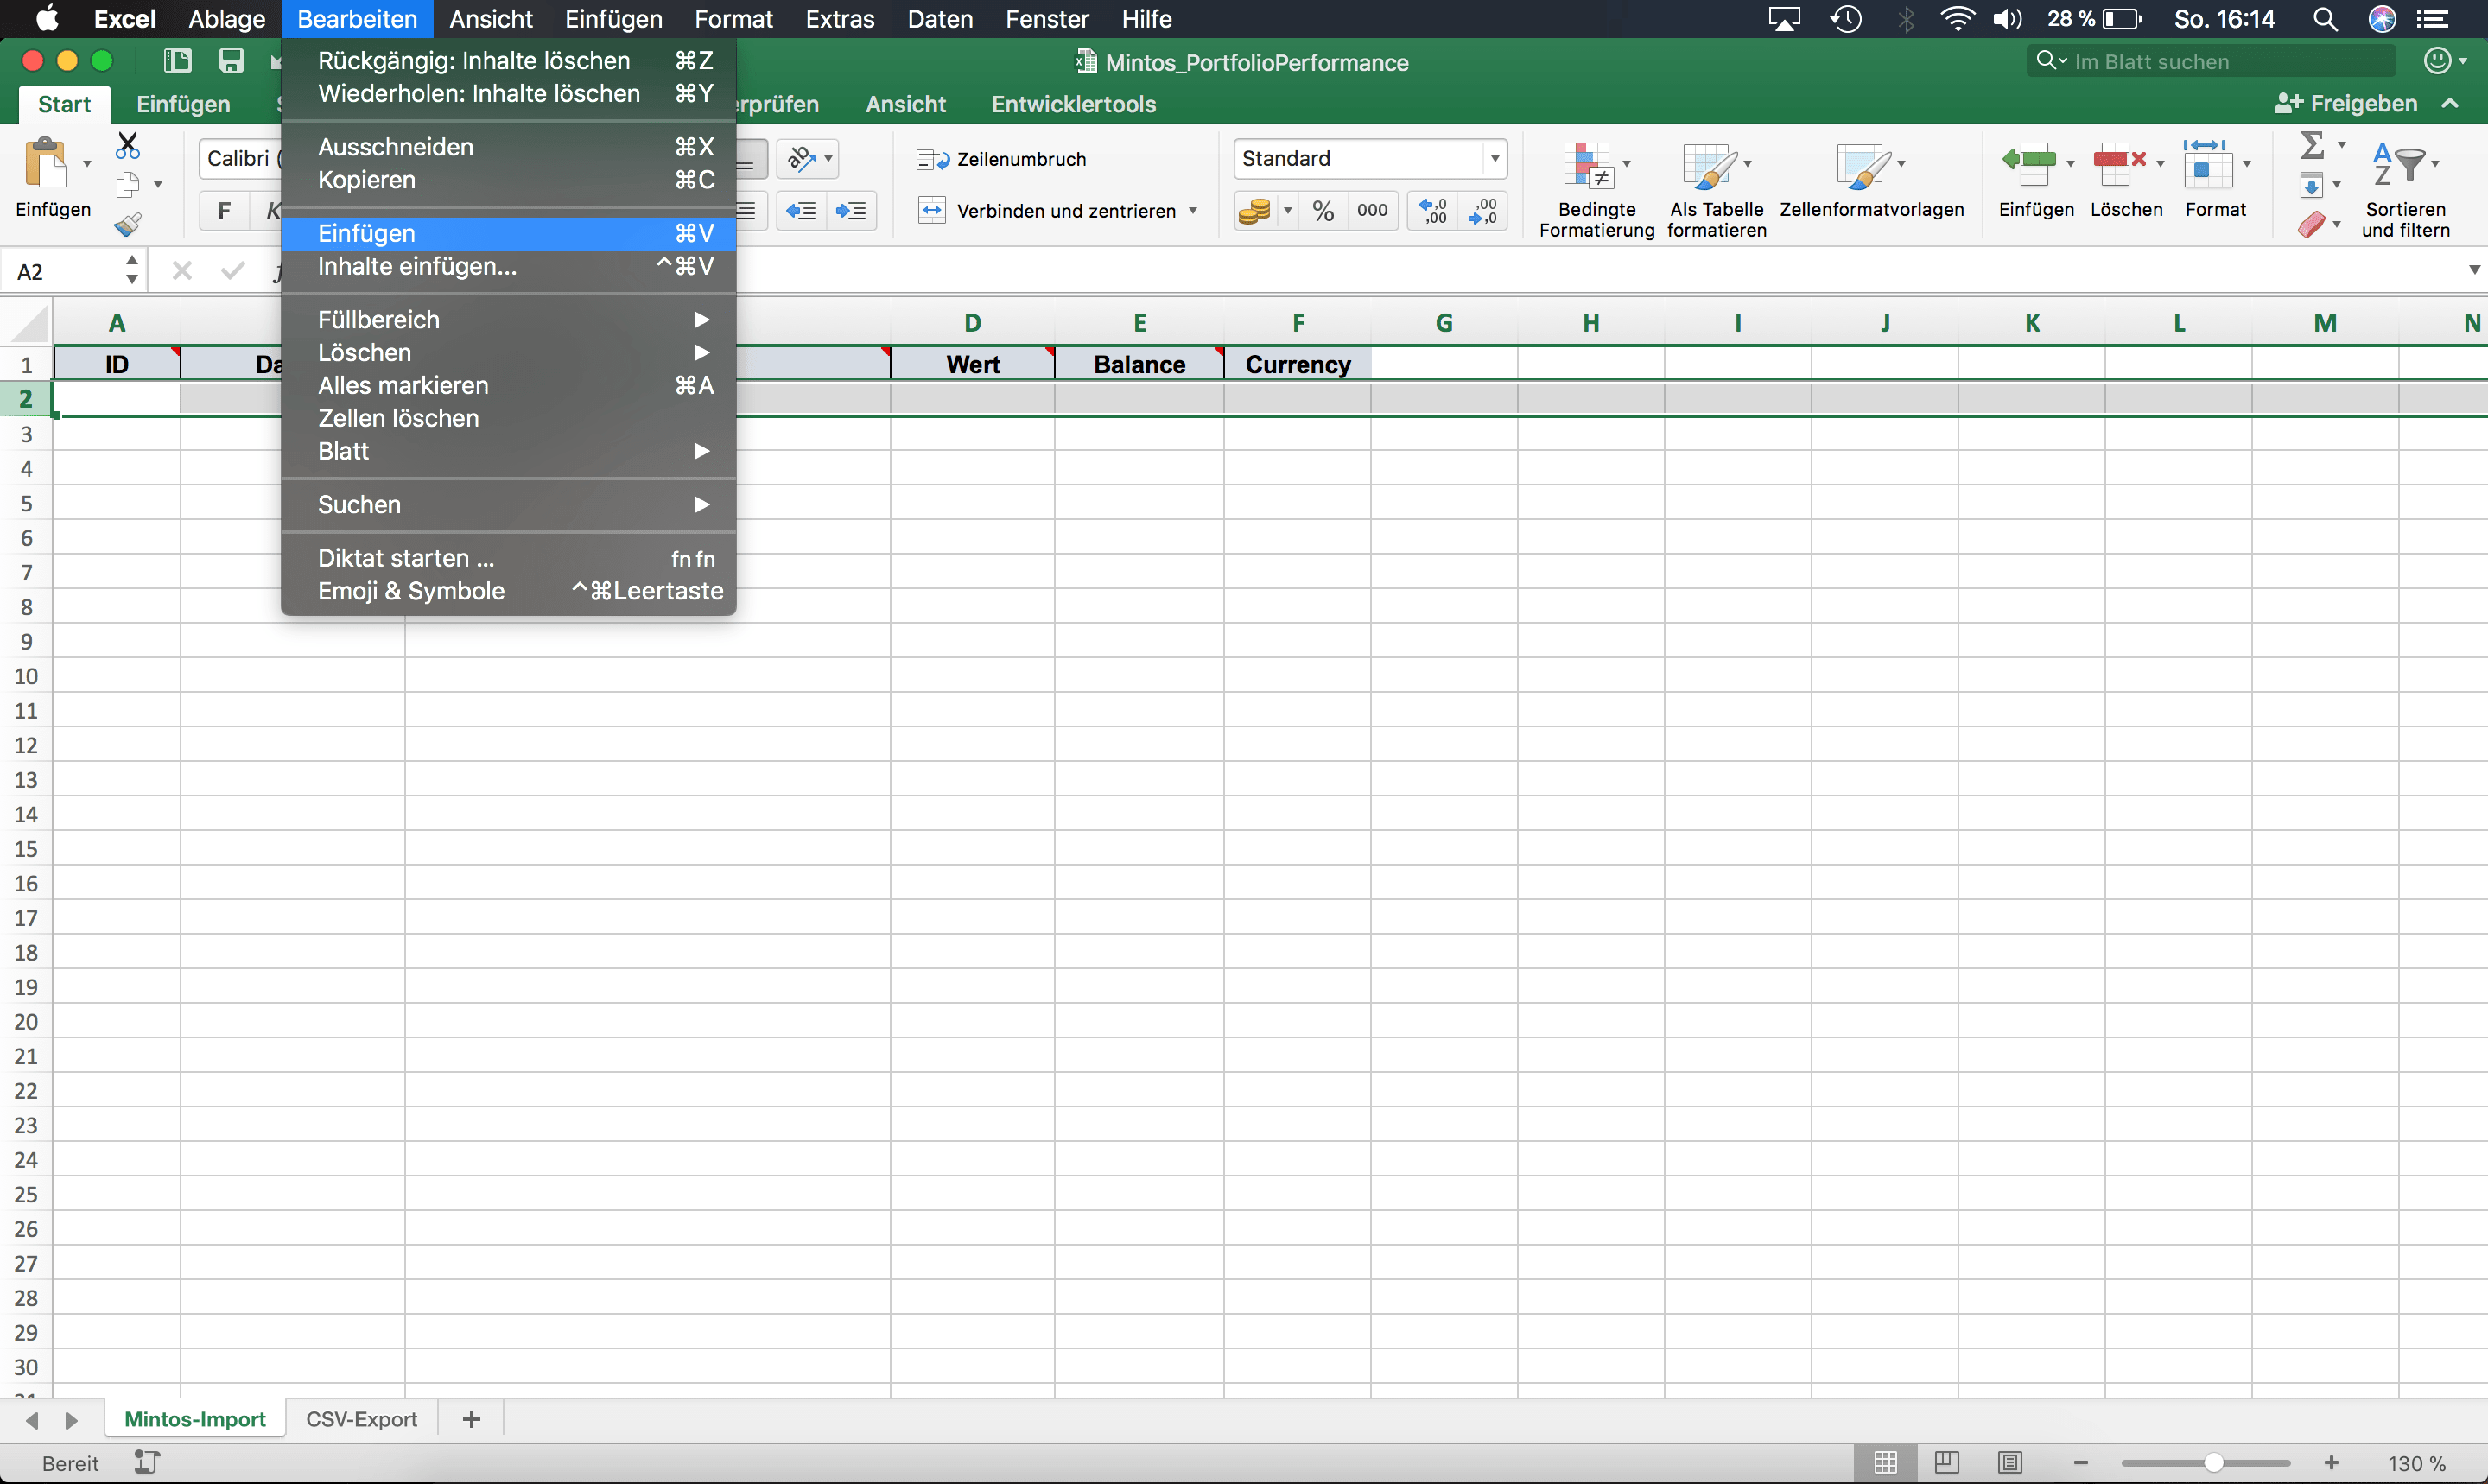 Kontoauszugsdaten ab der 2. Zeile Mintos in dieses Excel-Sheet kopieren